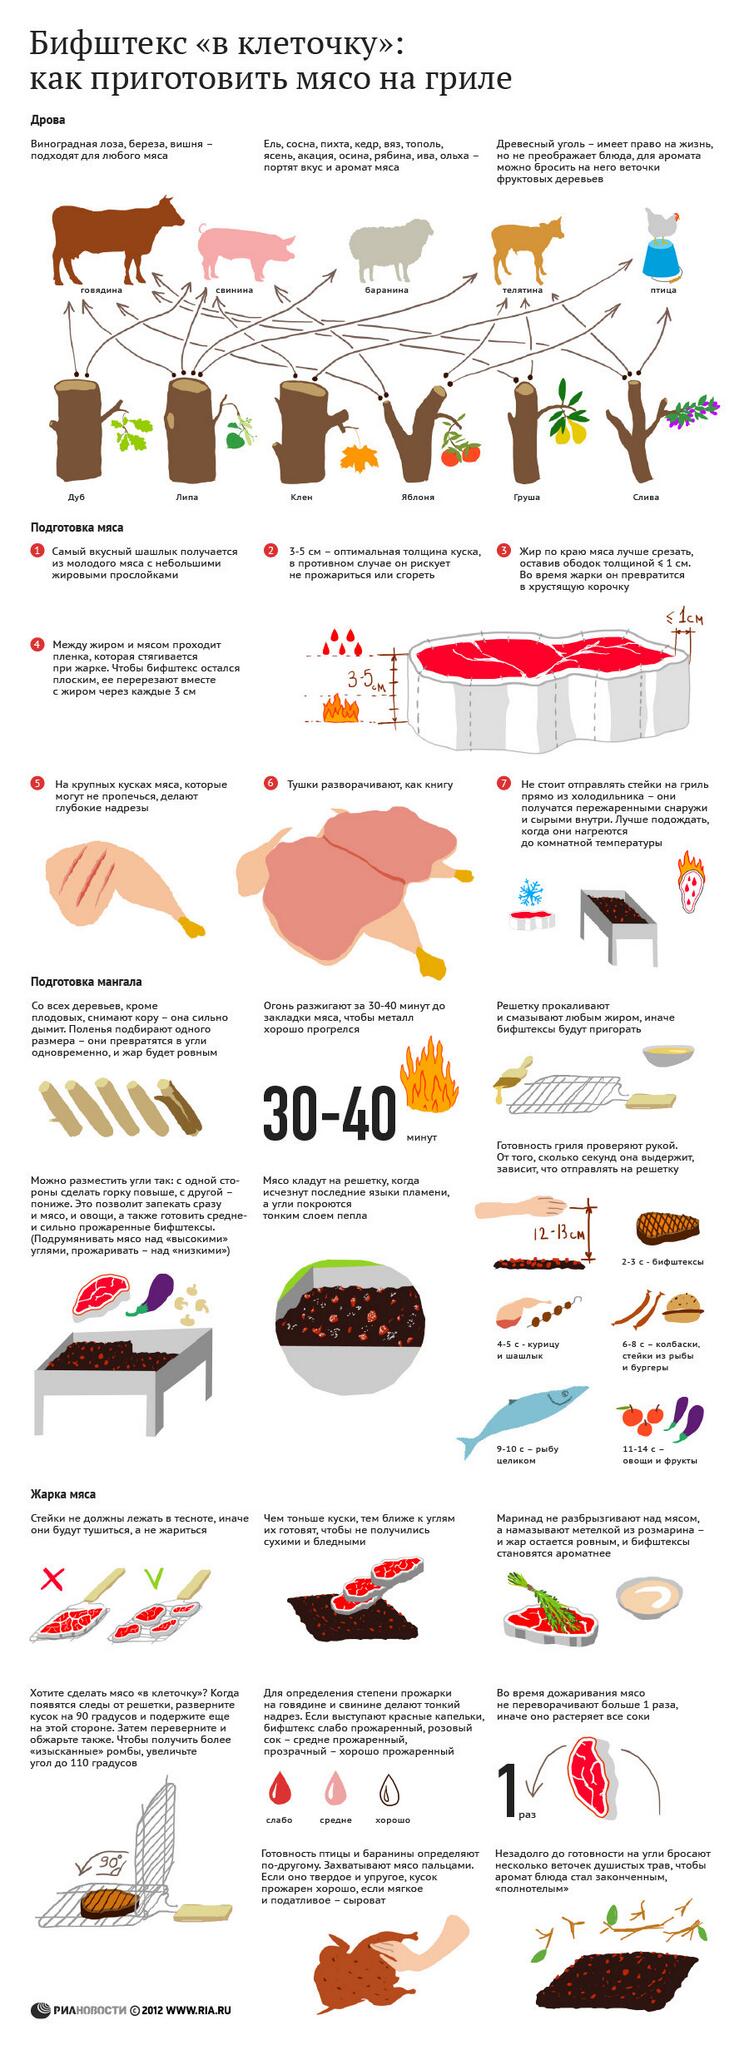 Как приготовить мясо на гриле